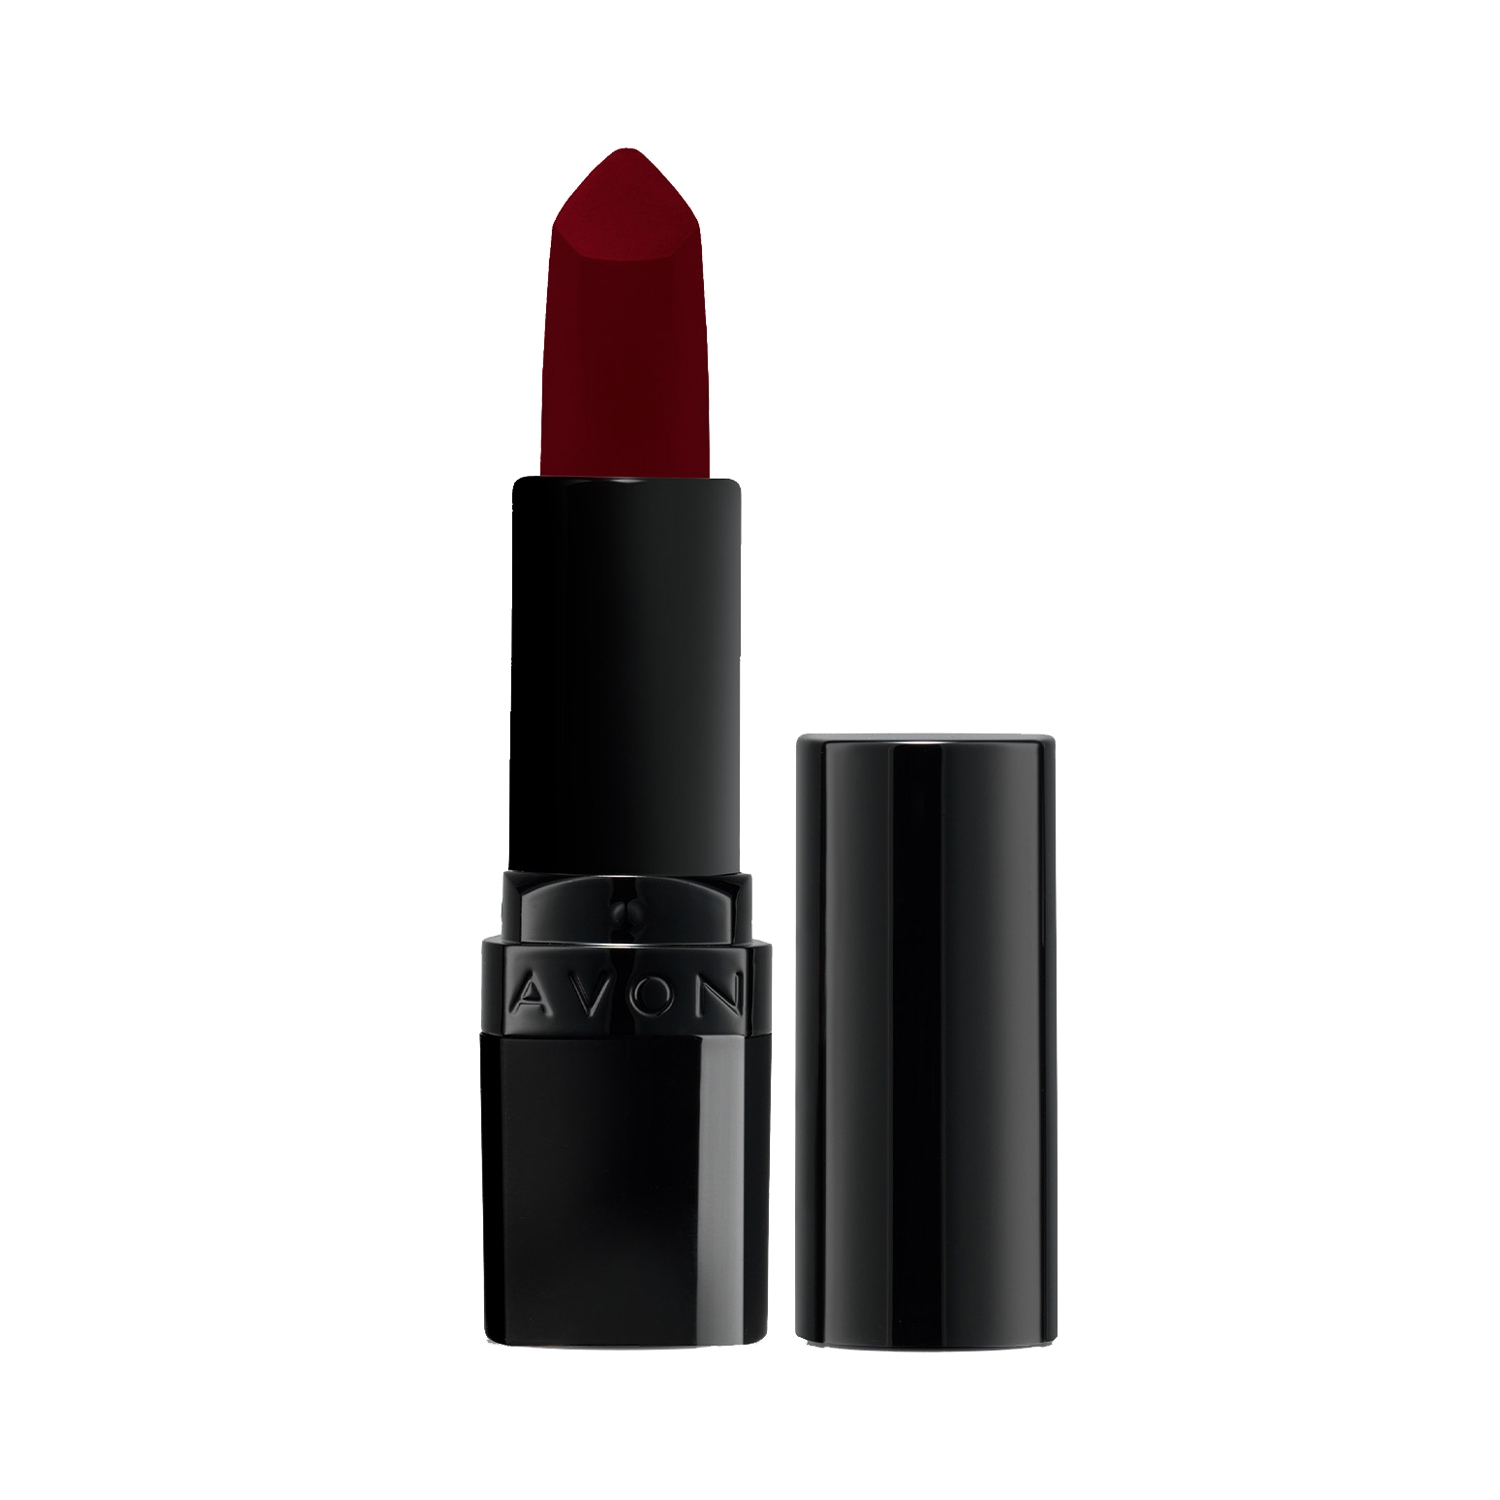 Avon | Avon Ultra Perfectly Matte Lipstick - Wild Cherry (4g)